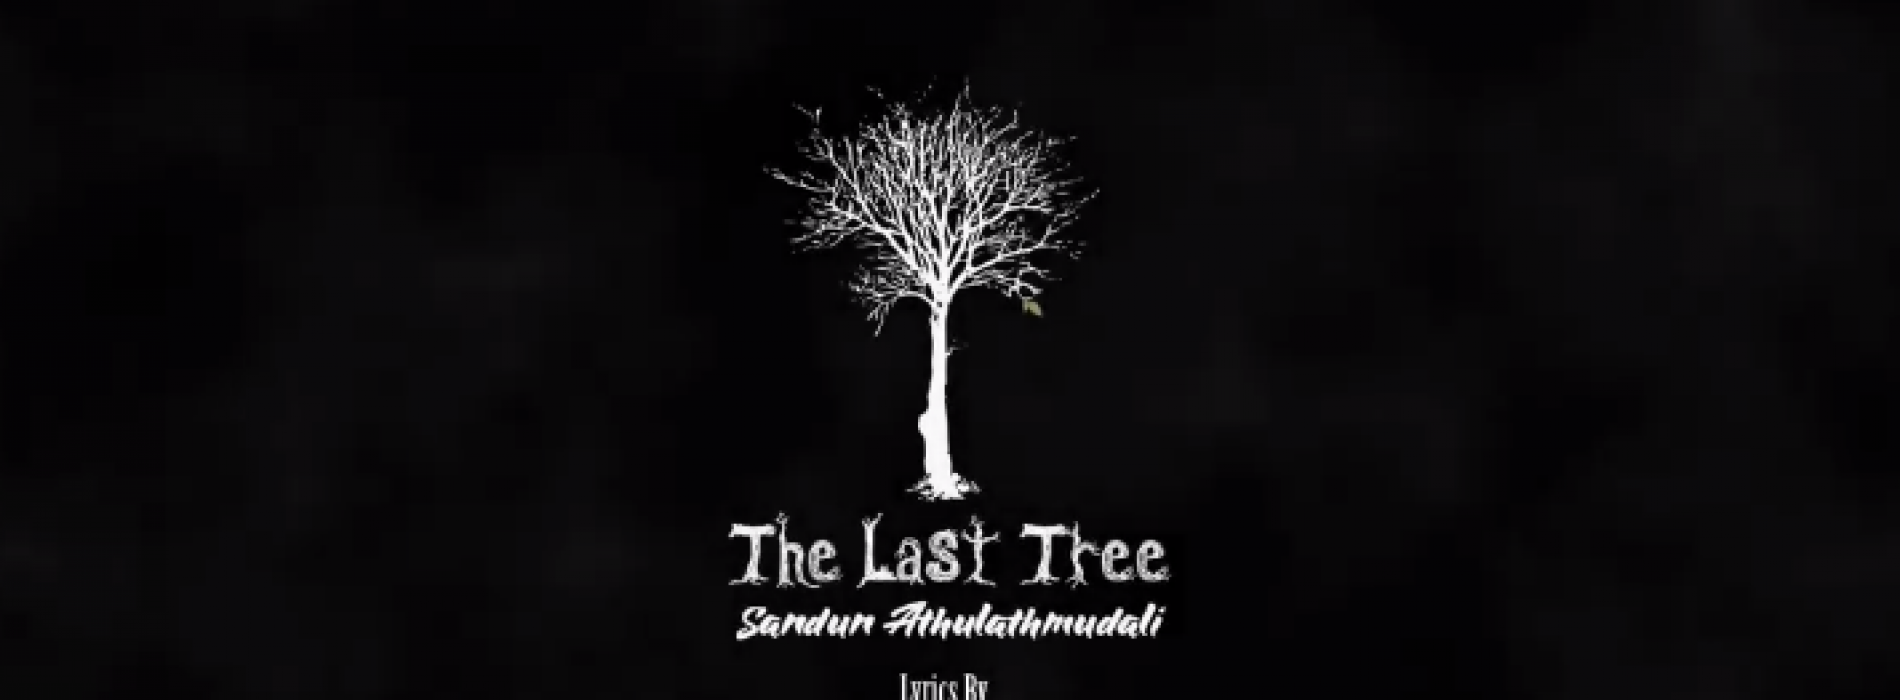 Sandun Athulathmudali – “The Last Tree” (Save Trees And Earth)